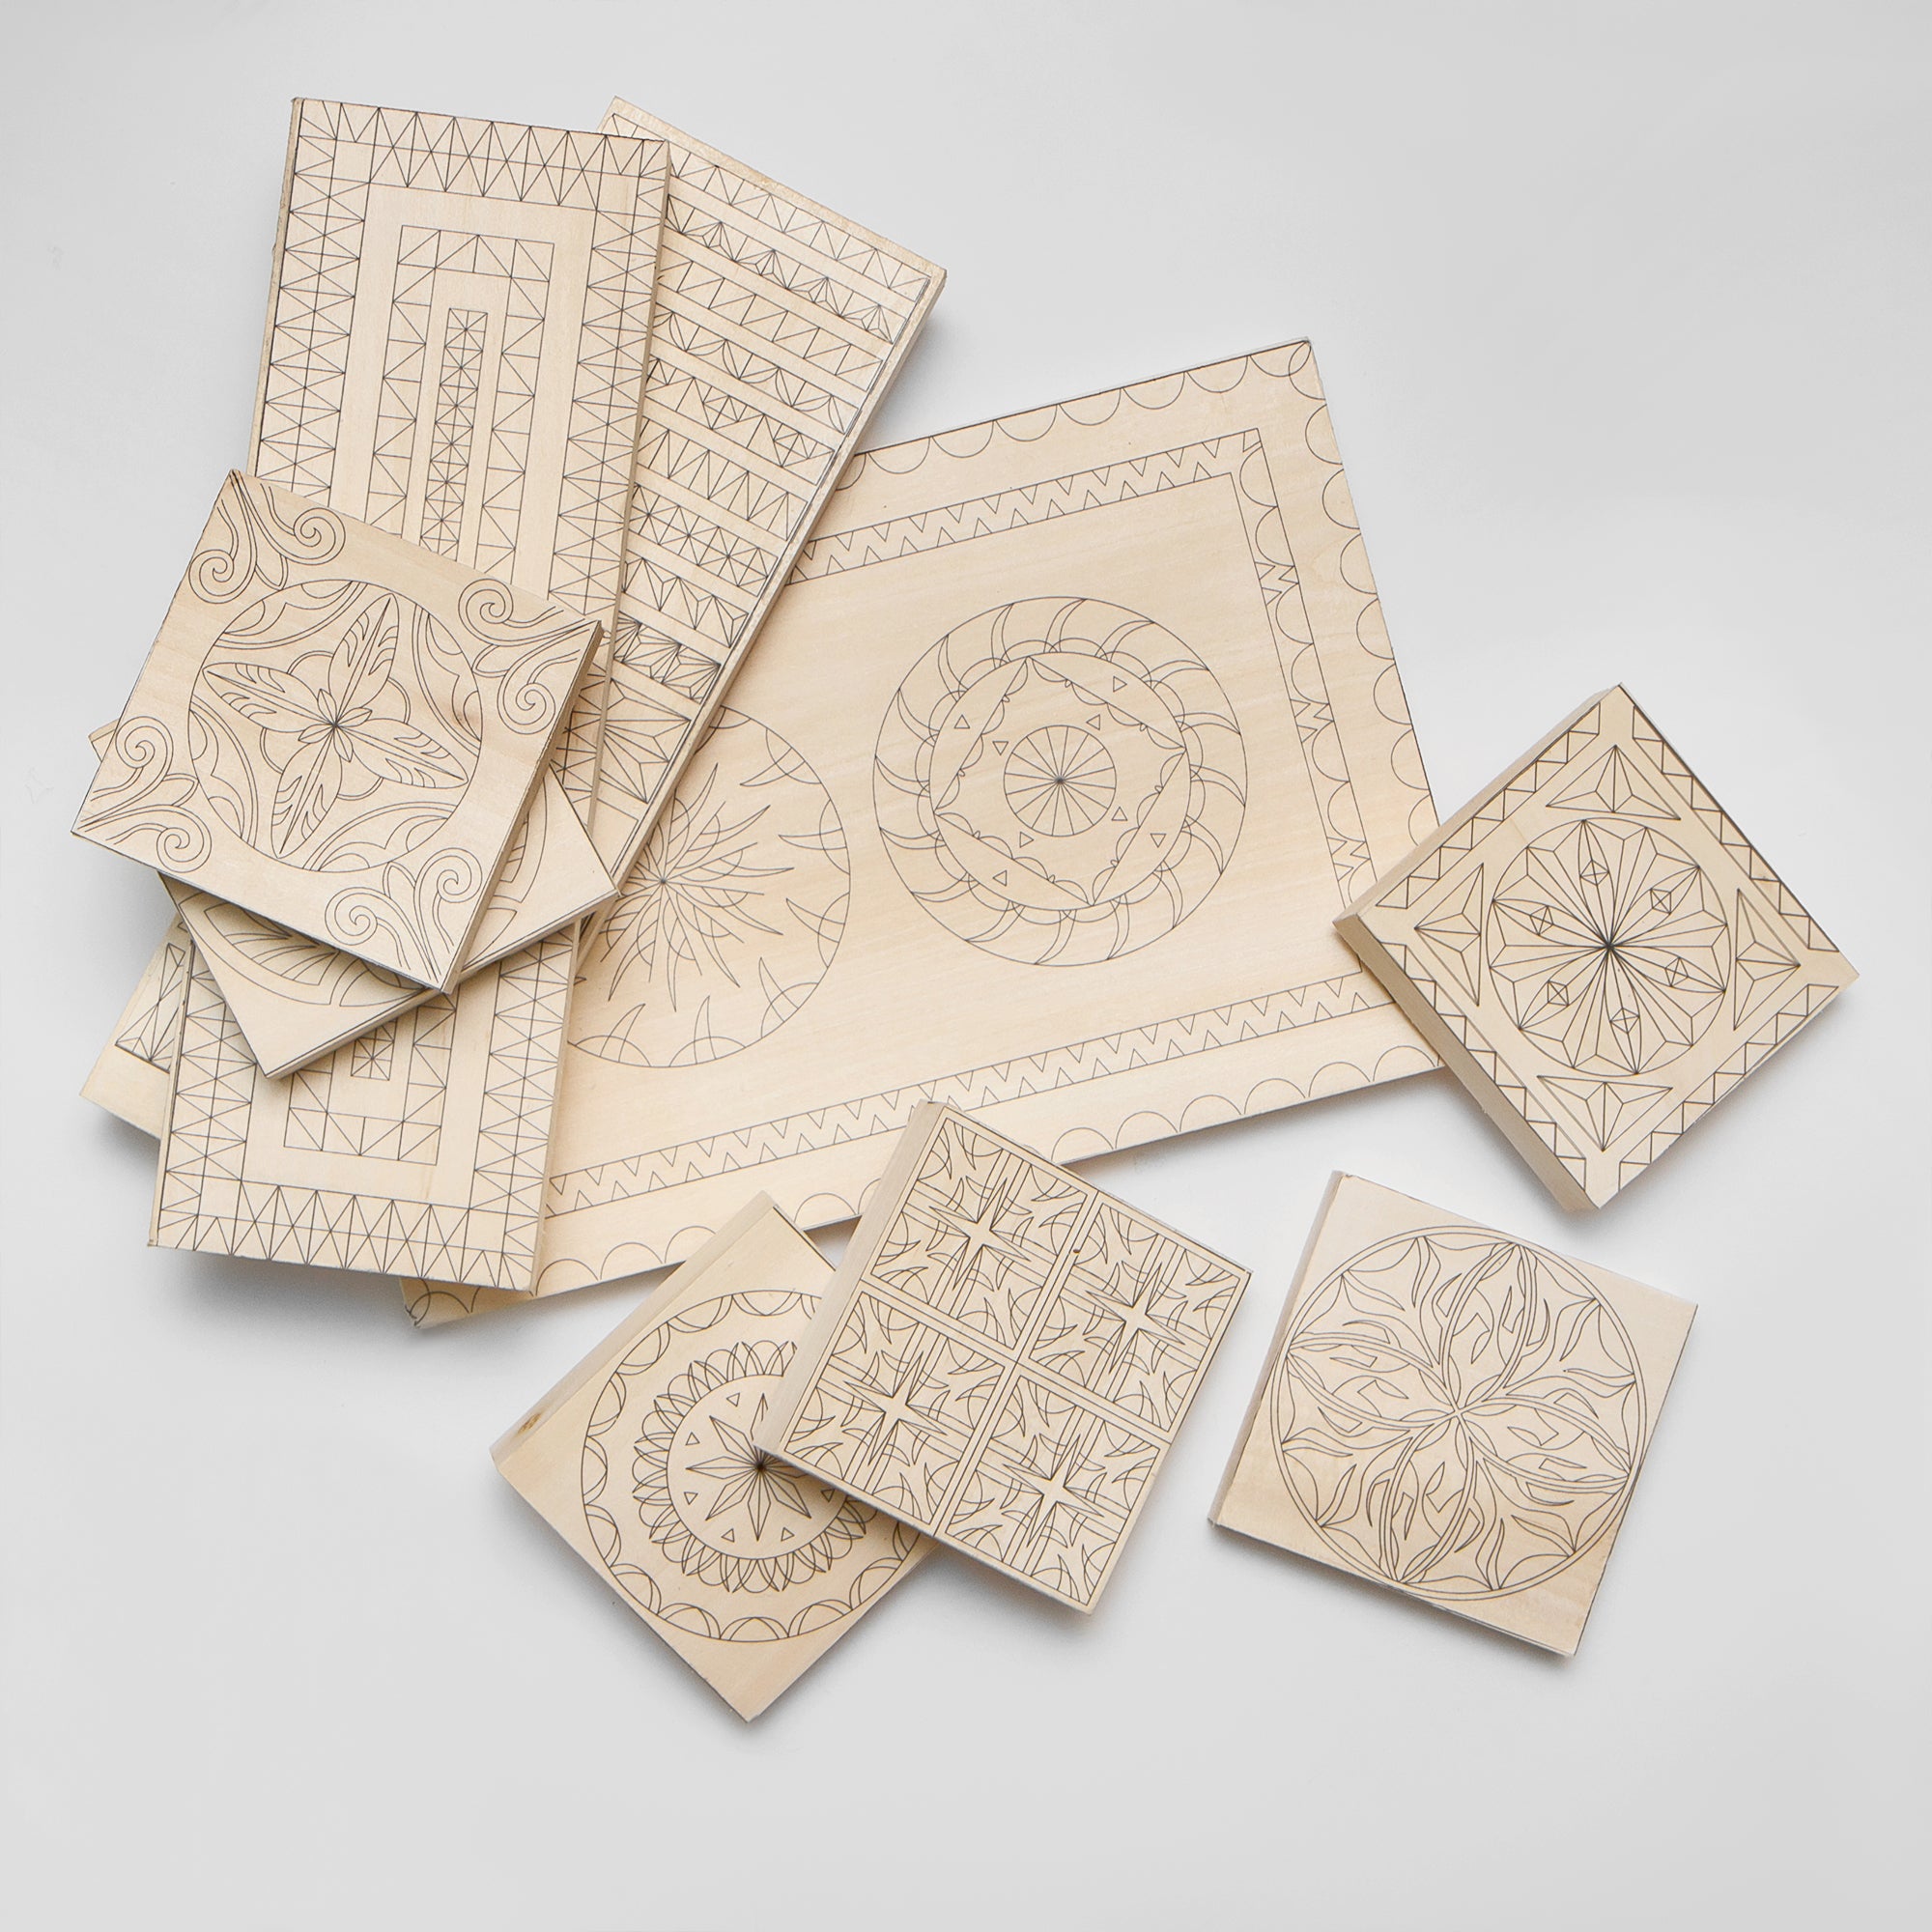 Tablero de tilo para tallar, madera en blanco para tallar madera,  decoración, álbum de recortes, 20*11,5 cm